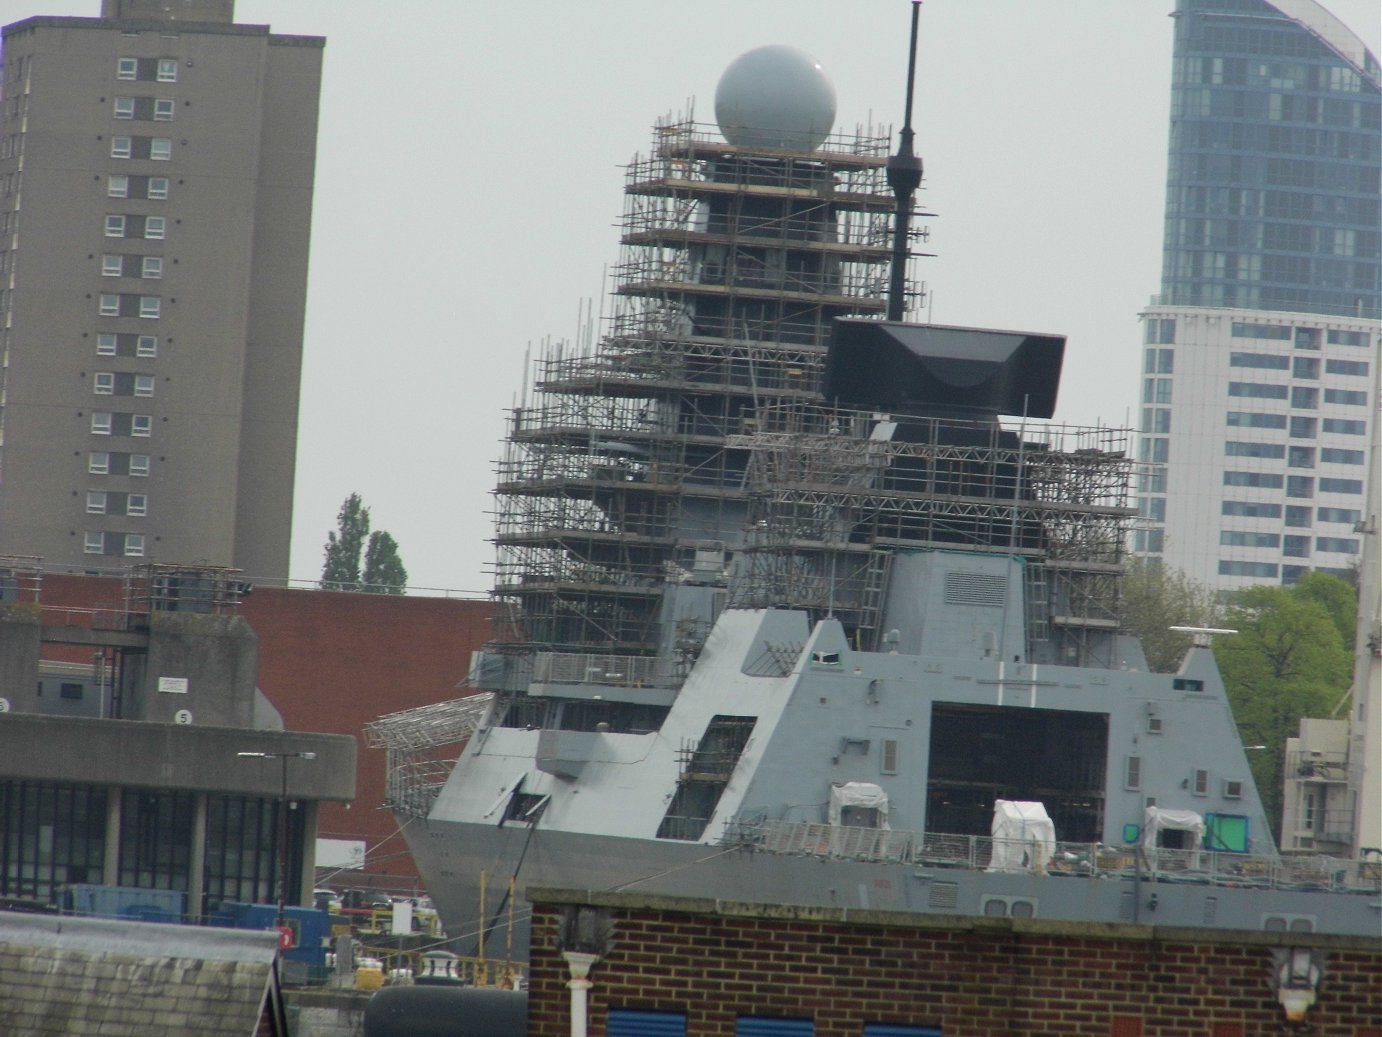 Type 45 destroyer H.M.S. Dauntless D33 at Portsmouth Naval Base 23 April 2019